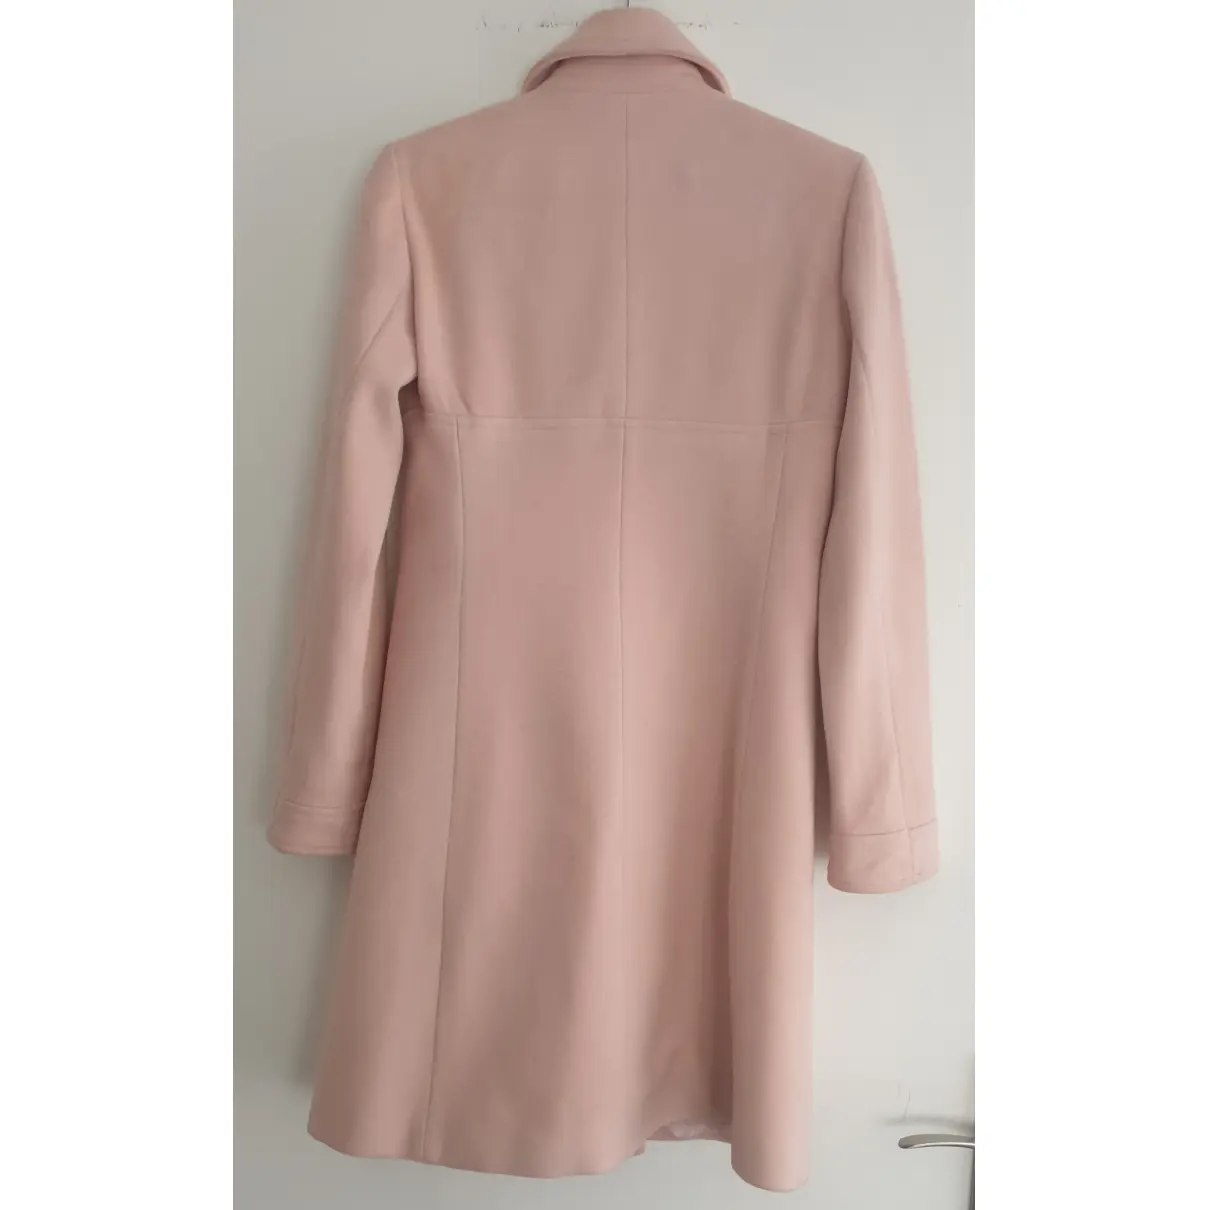 Buy Tara Jarmon Wool coat online